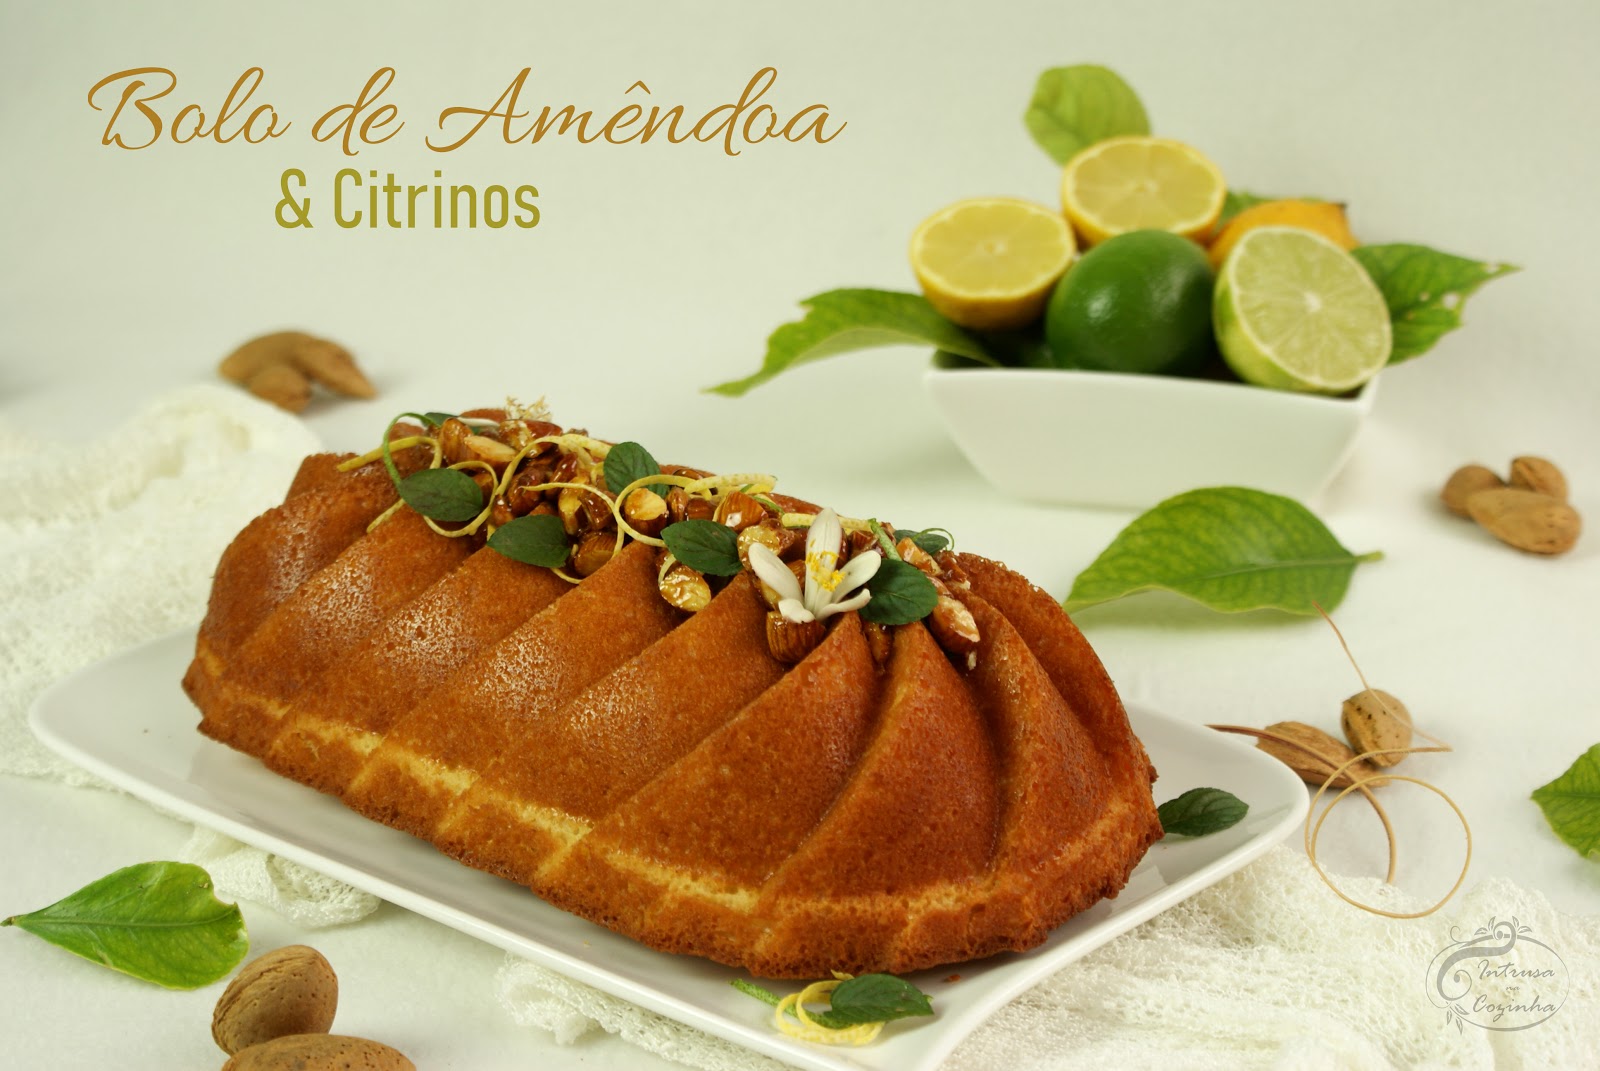 Bolo de Amêndoa & Citrinos (Almond & Citrus Loaf Cake)